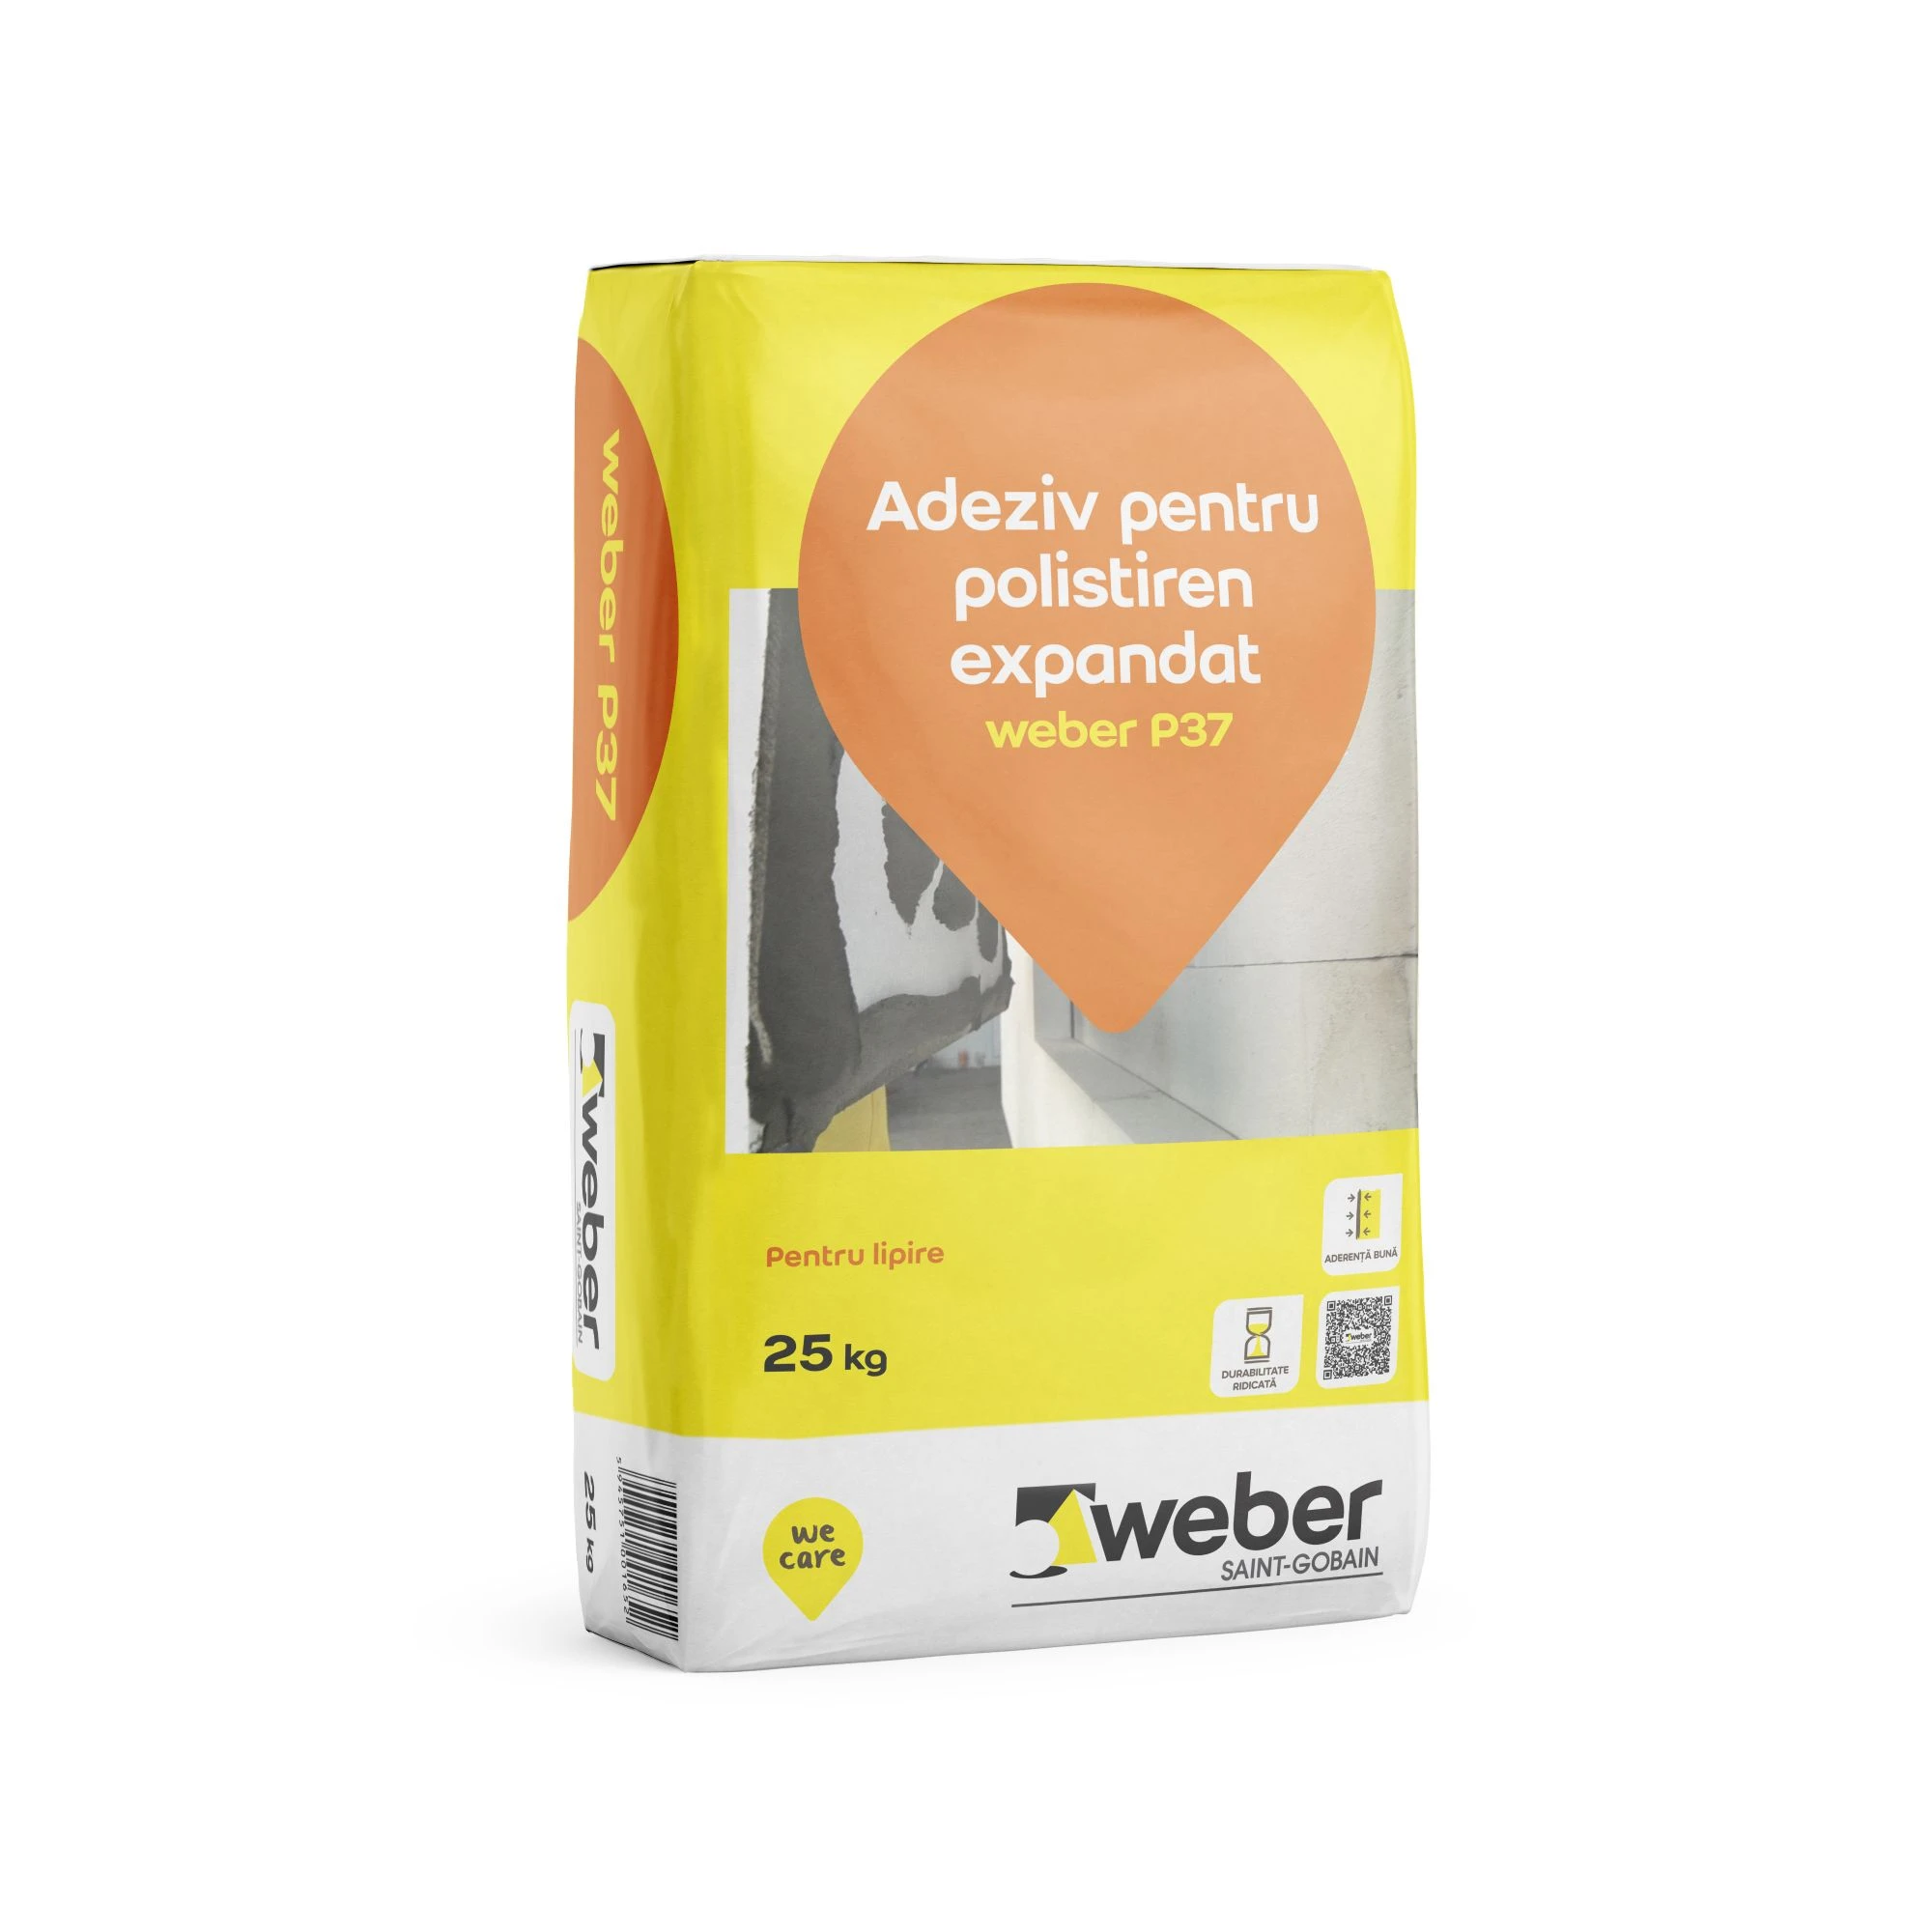 adeziv weber P37 [1]